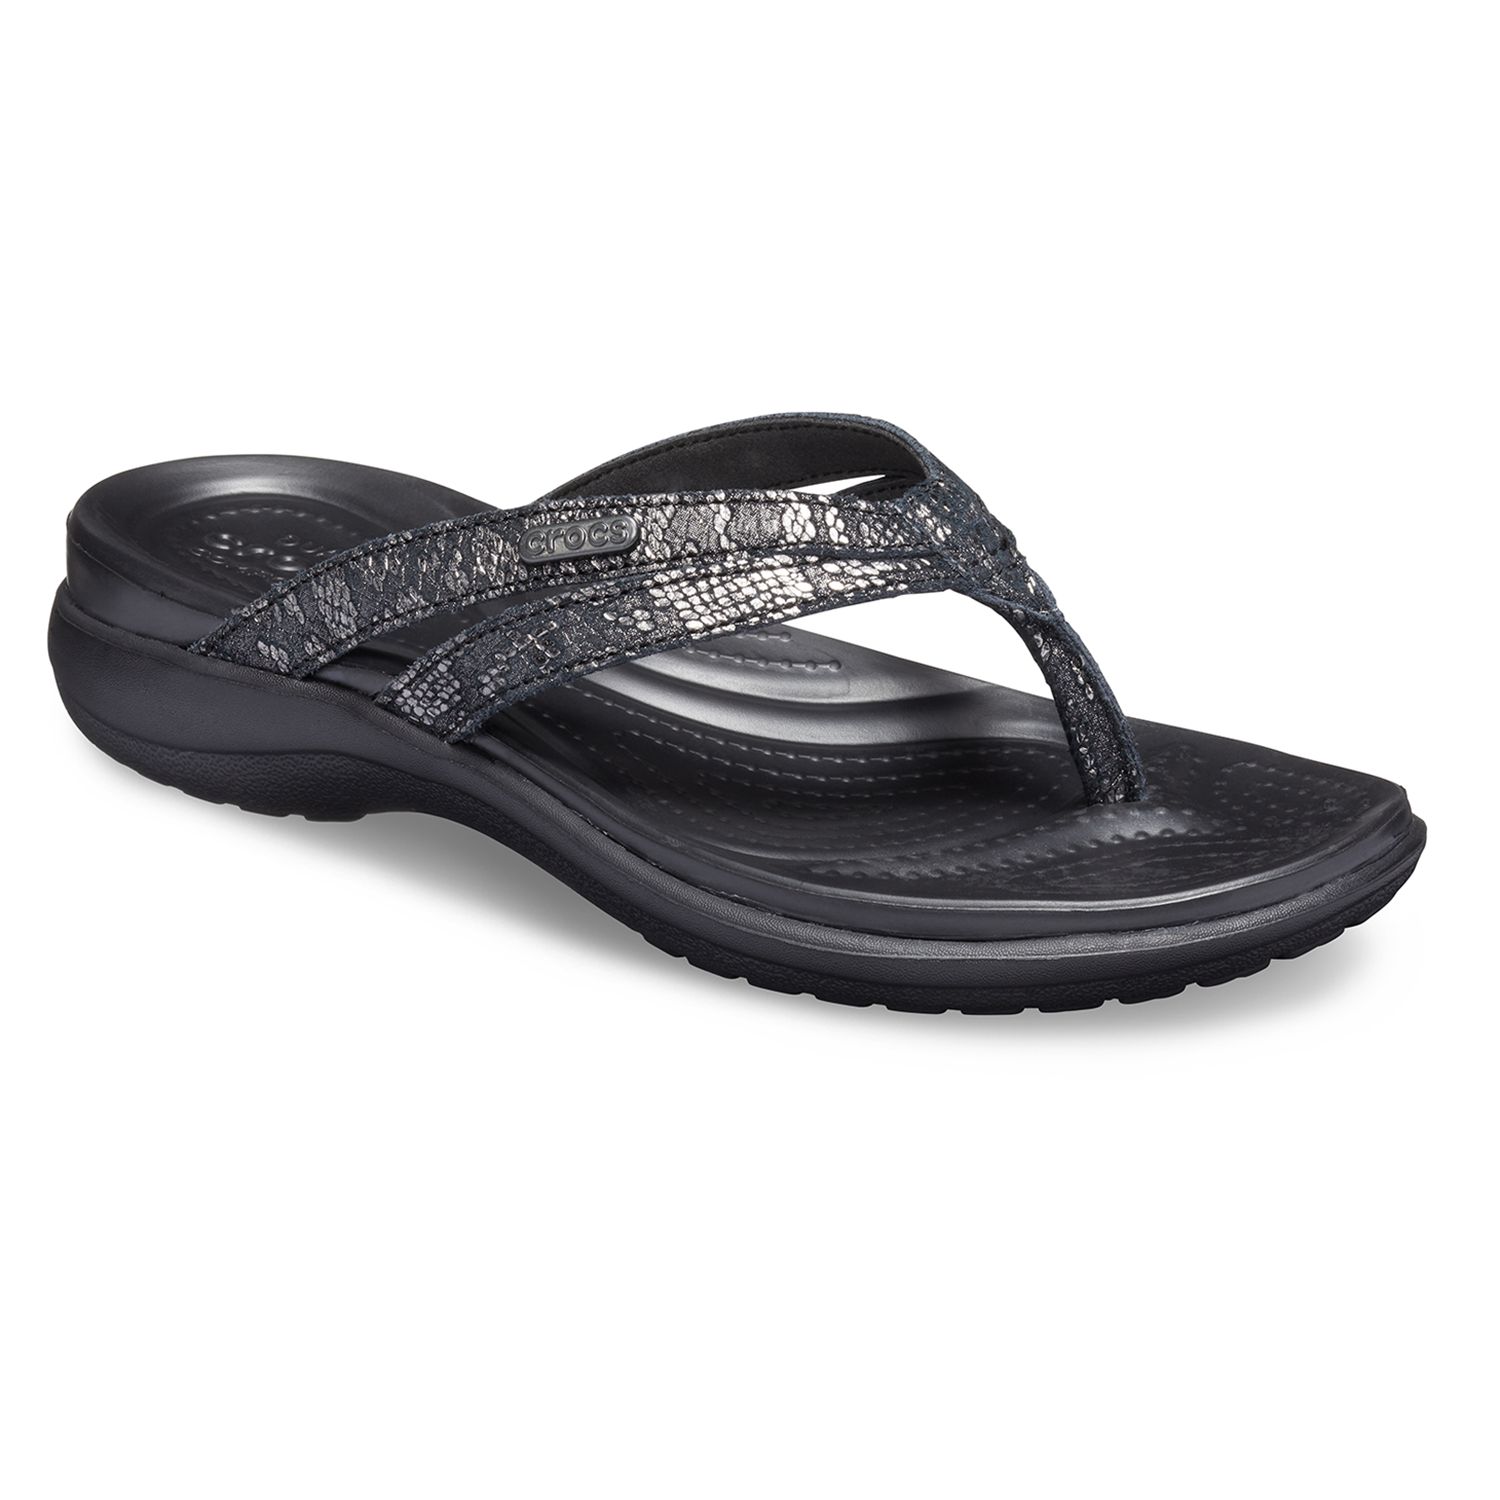 Crocs Capri Women's Flip Flop Sandals